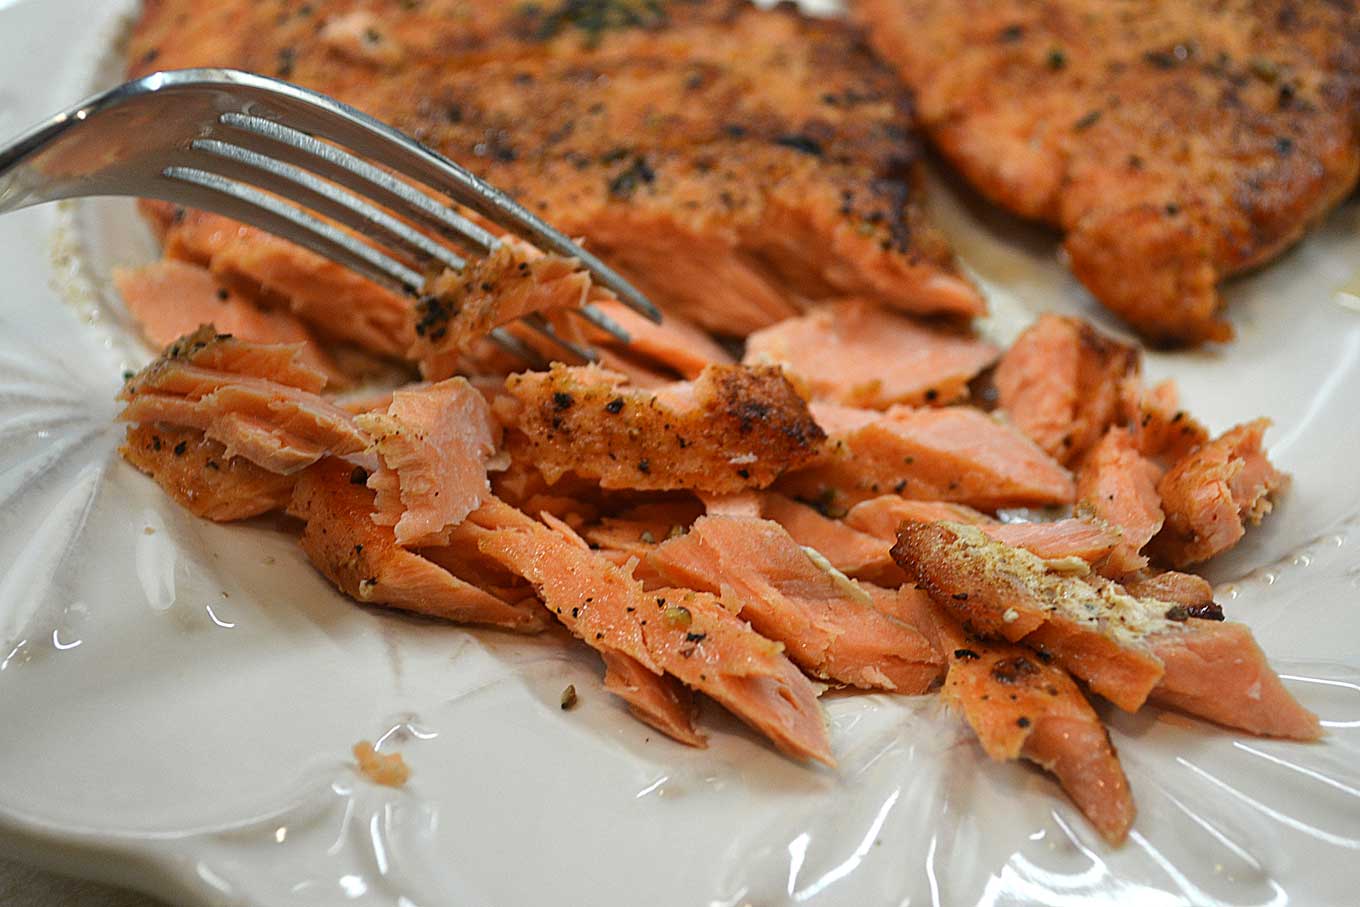 salmon, leeks & feta spaghetti | rusticplate.com